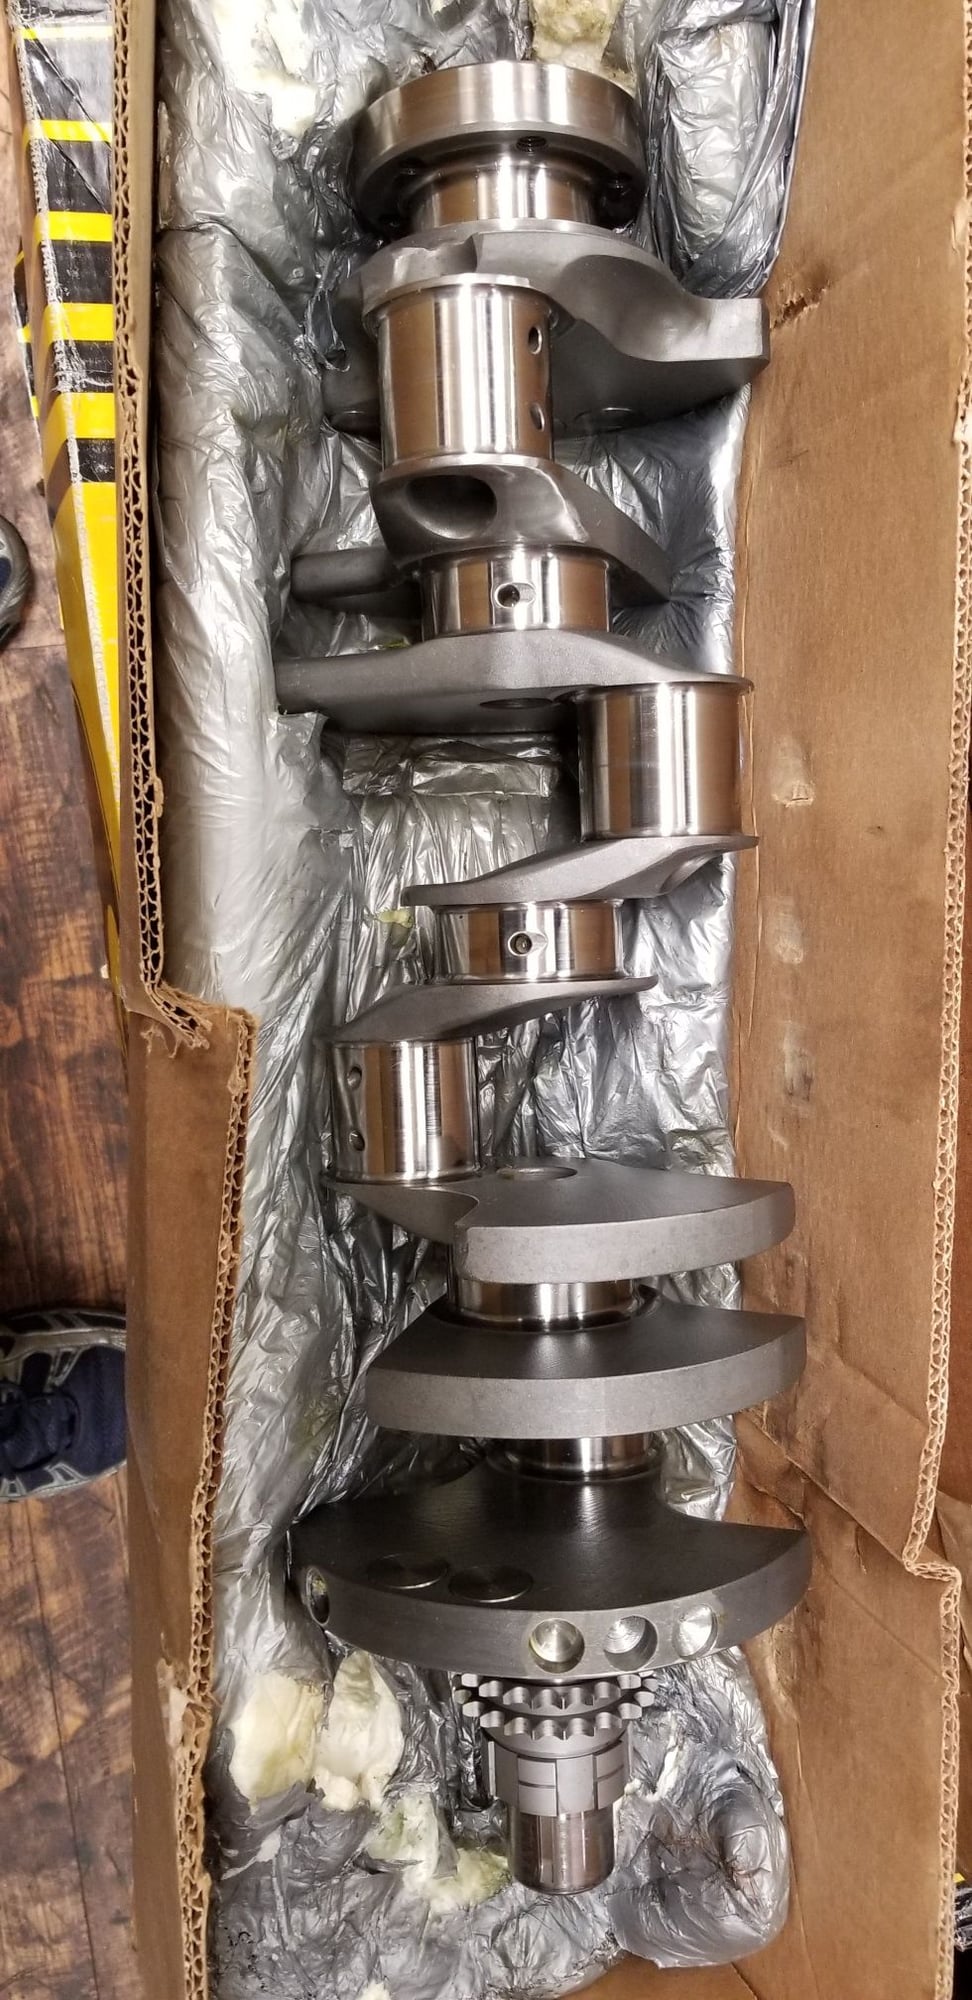 Engine - Internals - Callies Magnum Crankshaft - Used - Elmont, NY 11003, United States